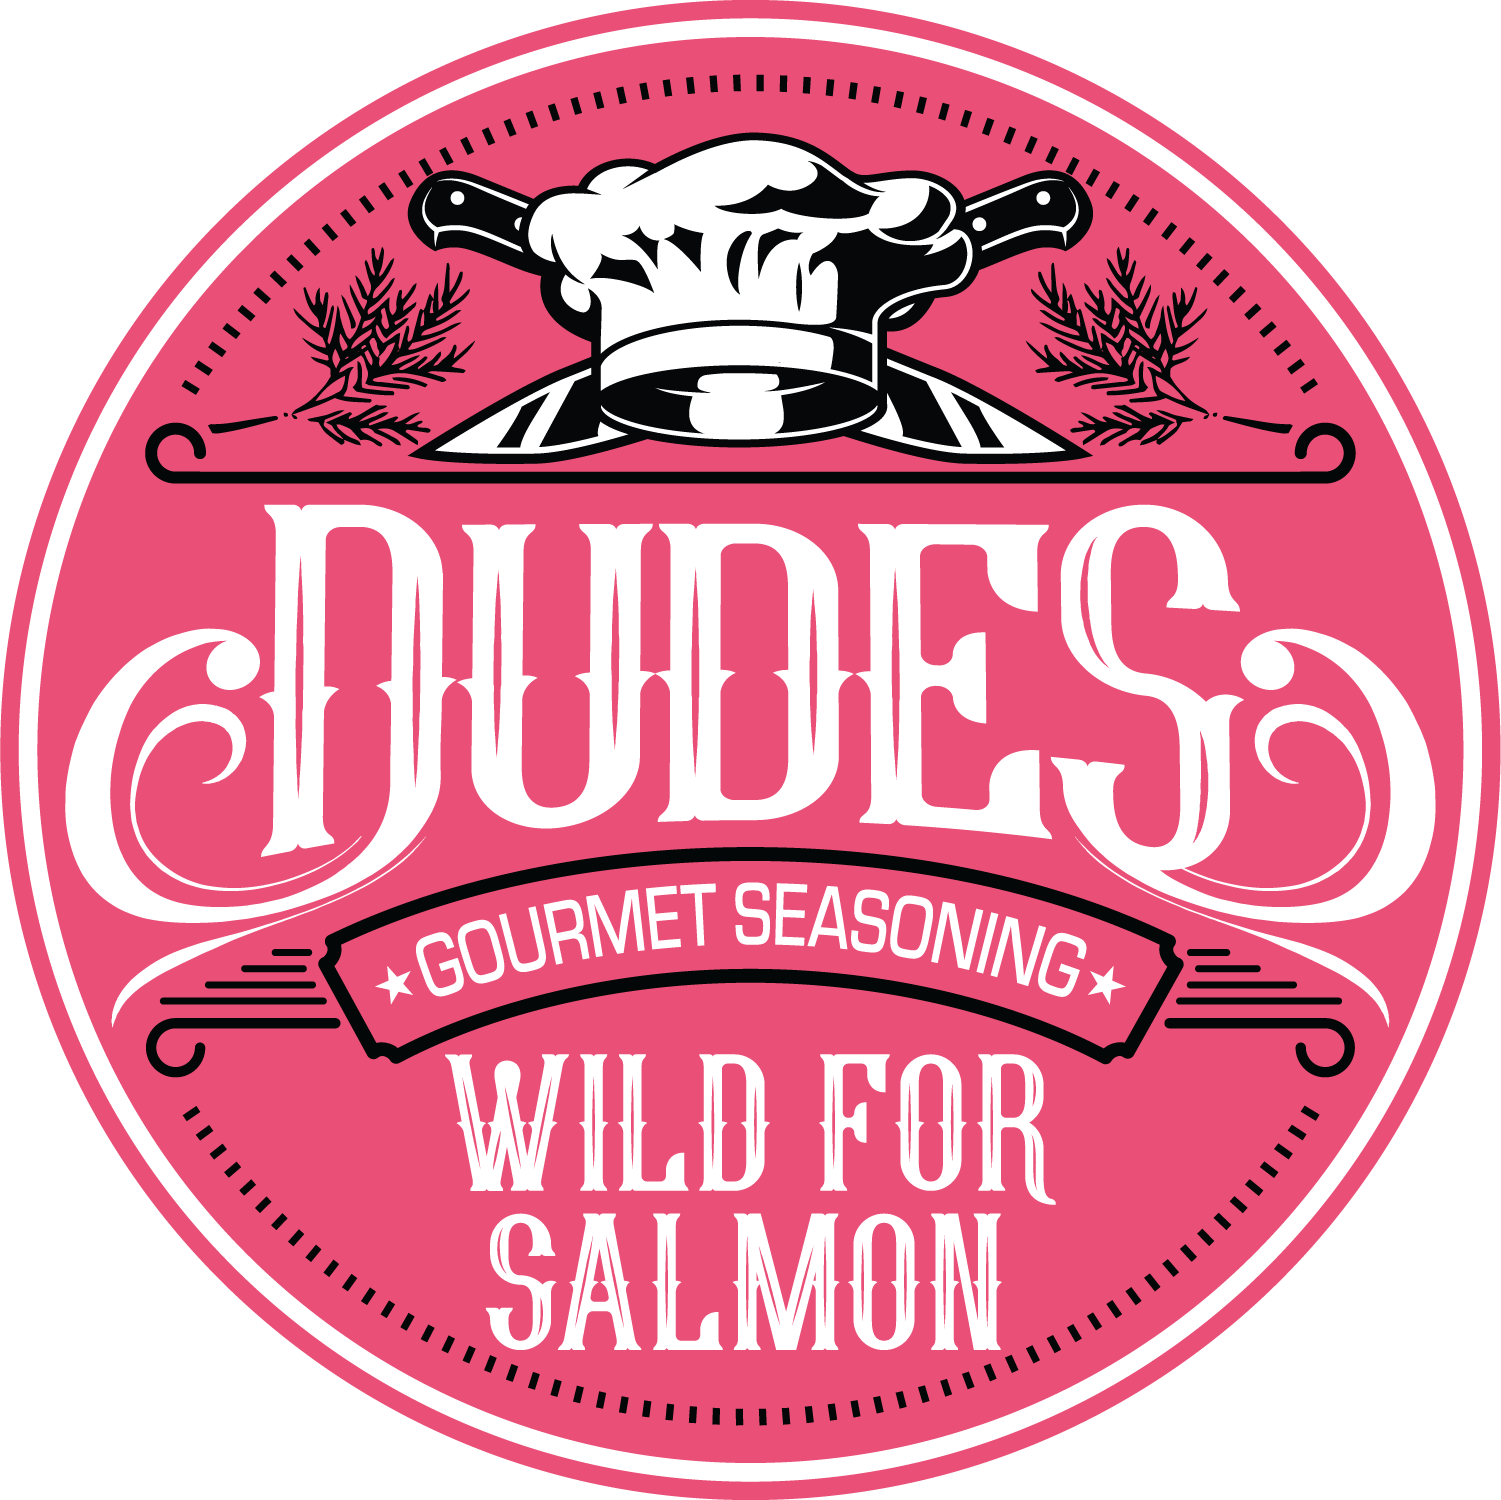 Wild for Salmon Seasoning